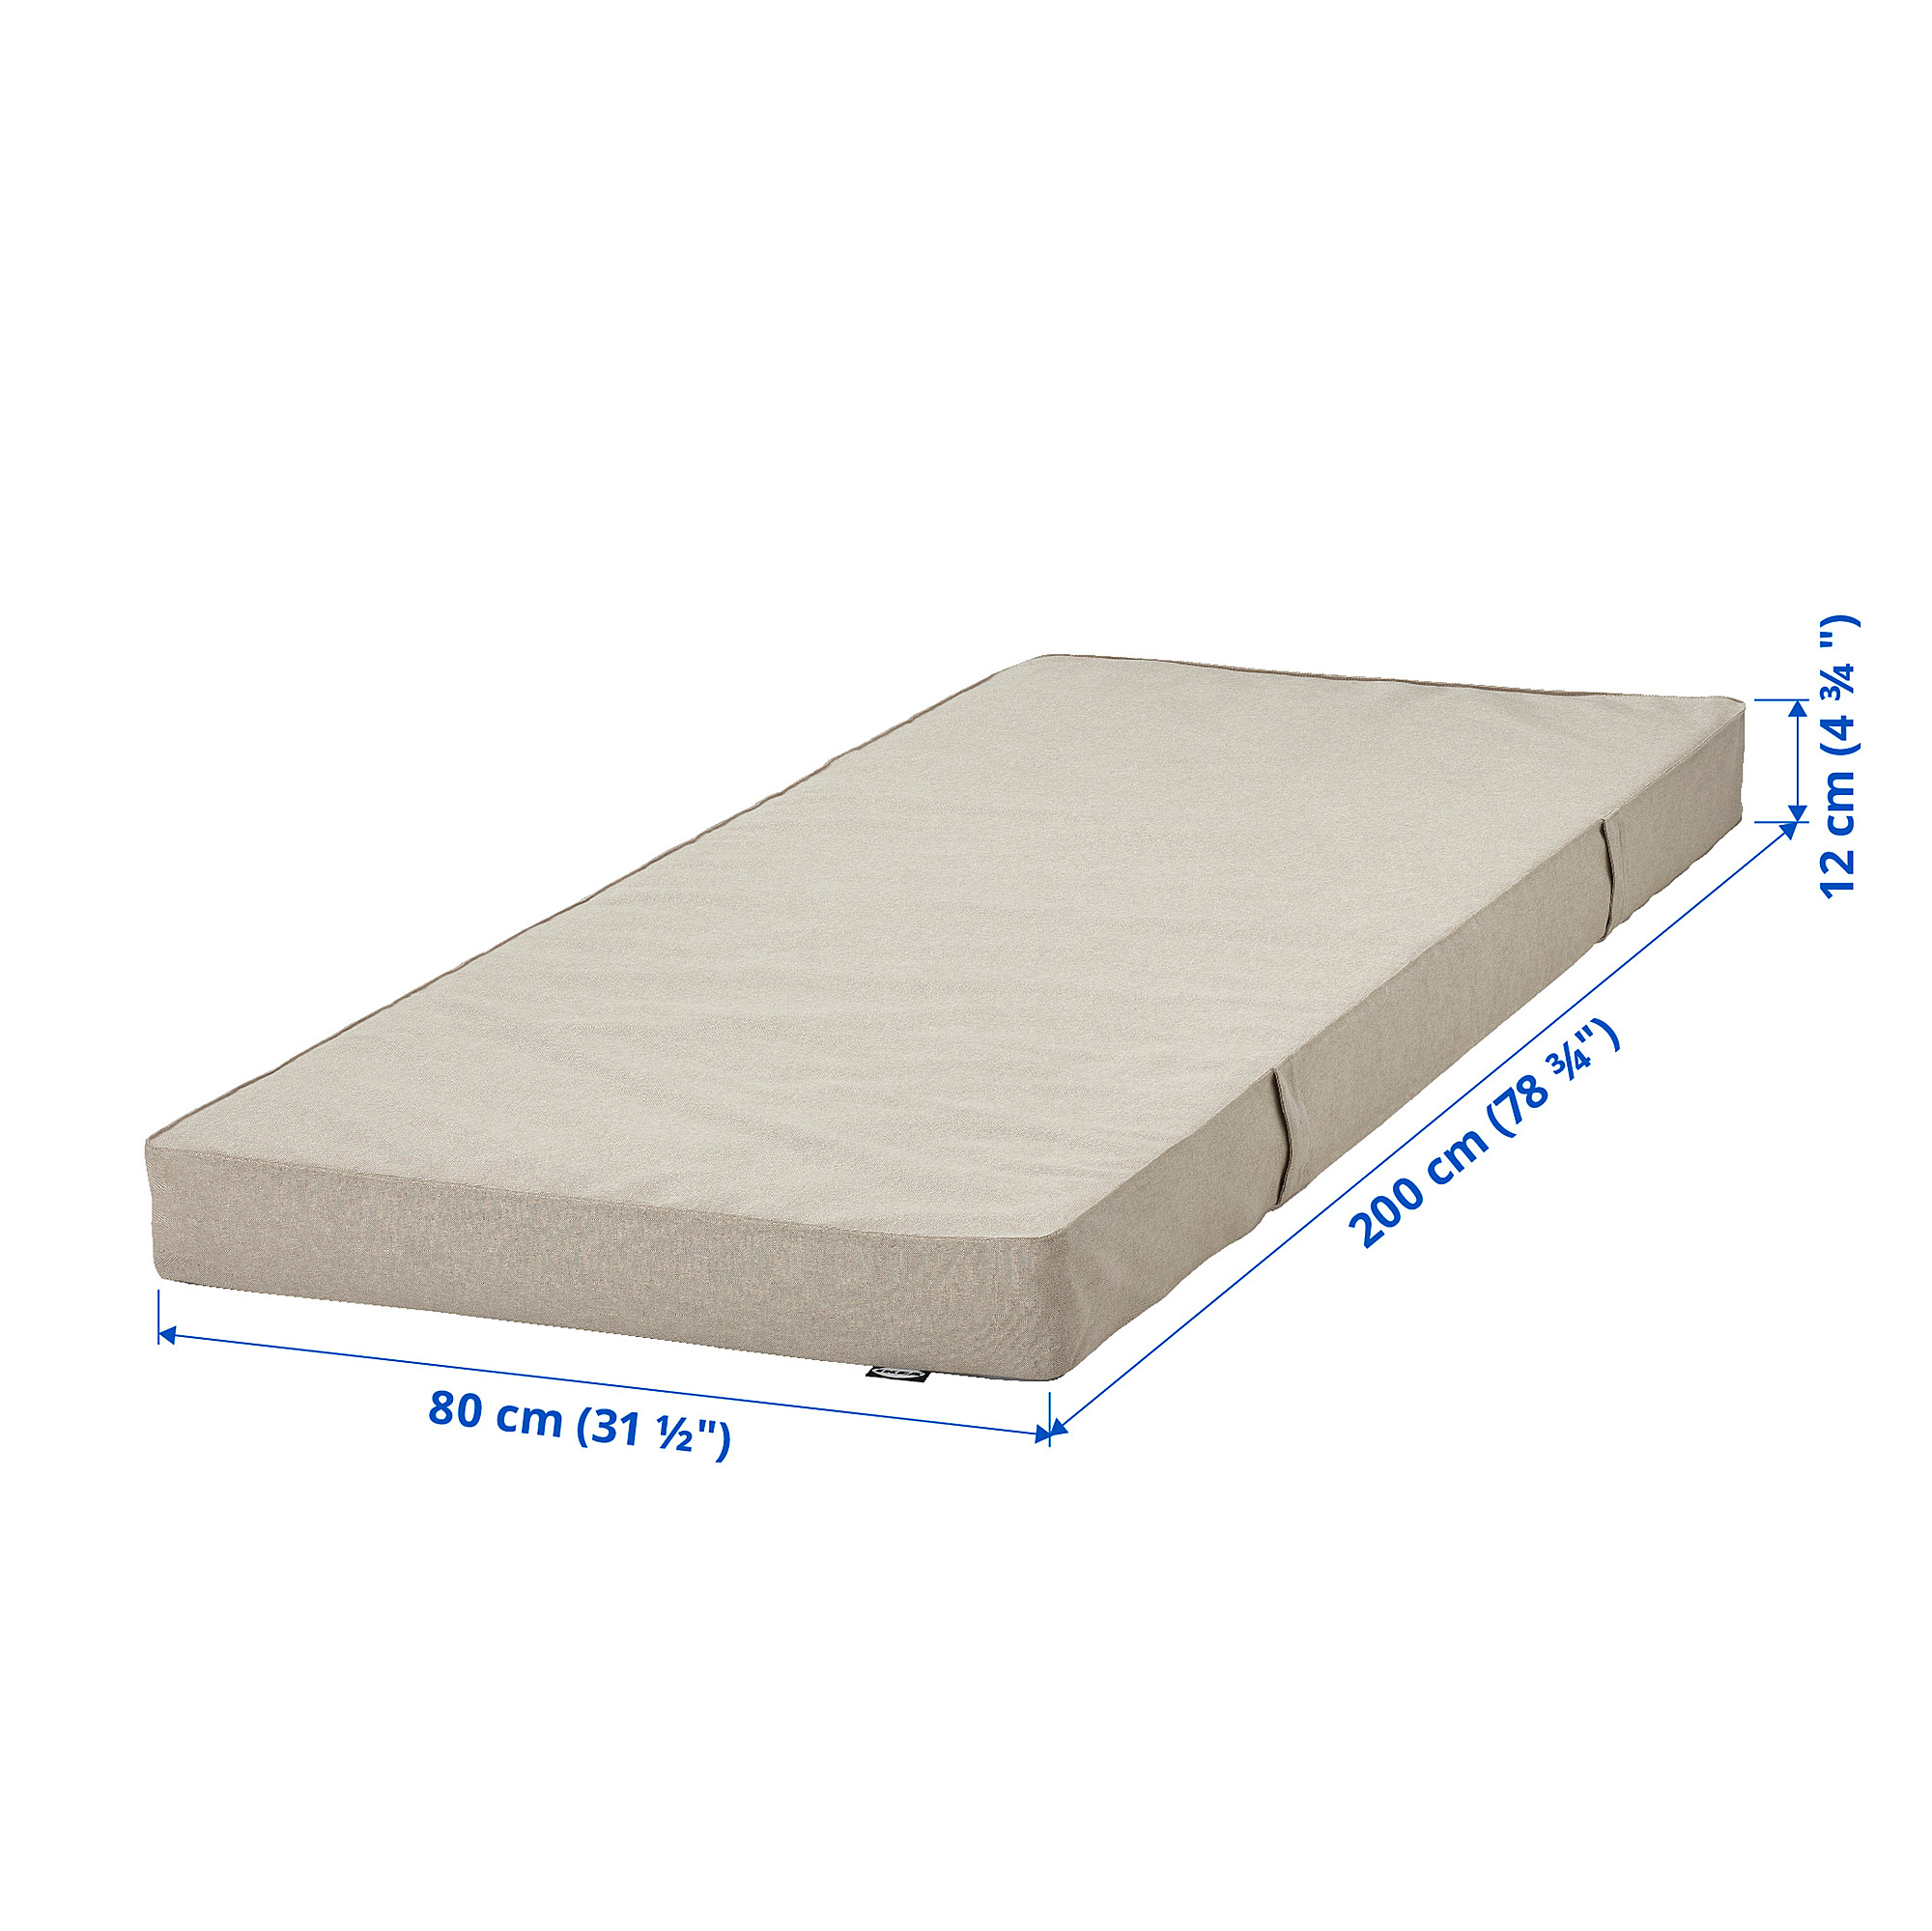 VANNAREID pocket sprung mattress